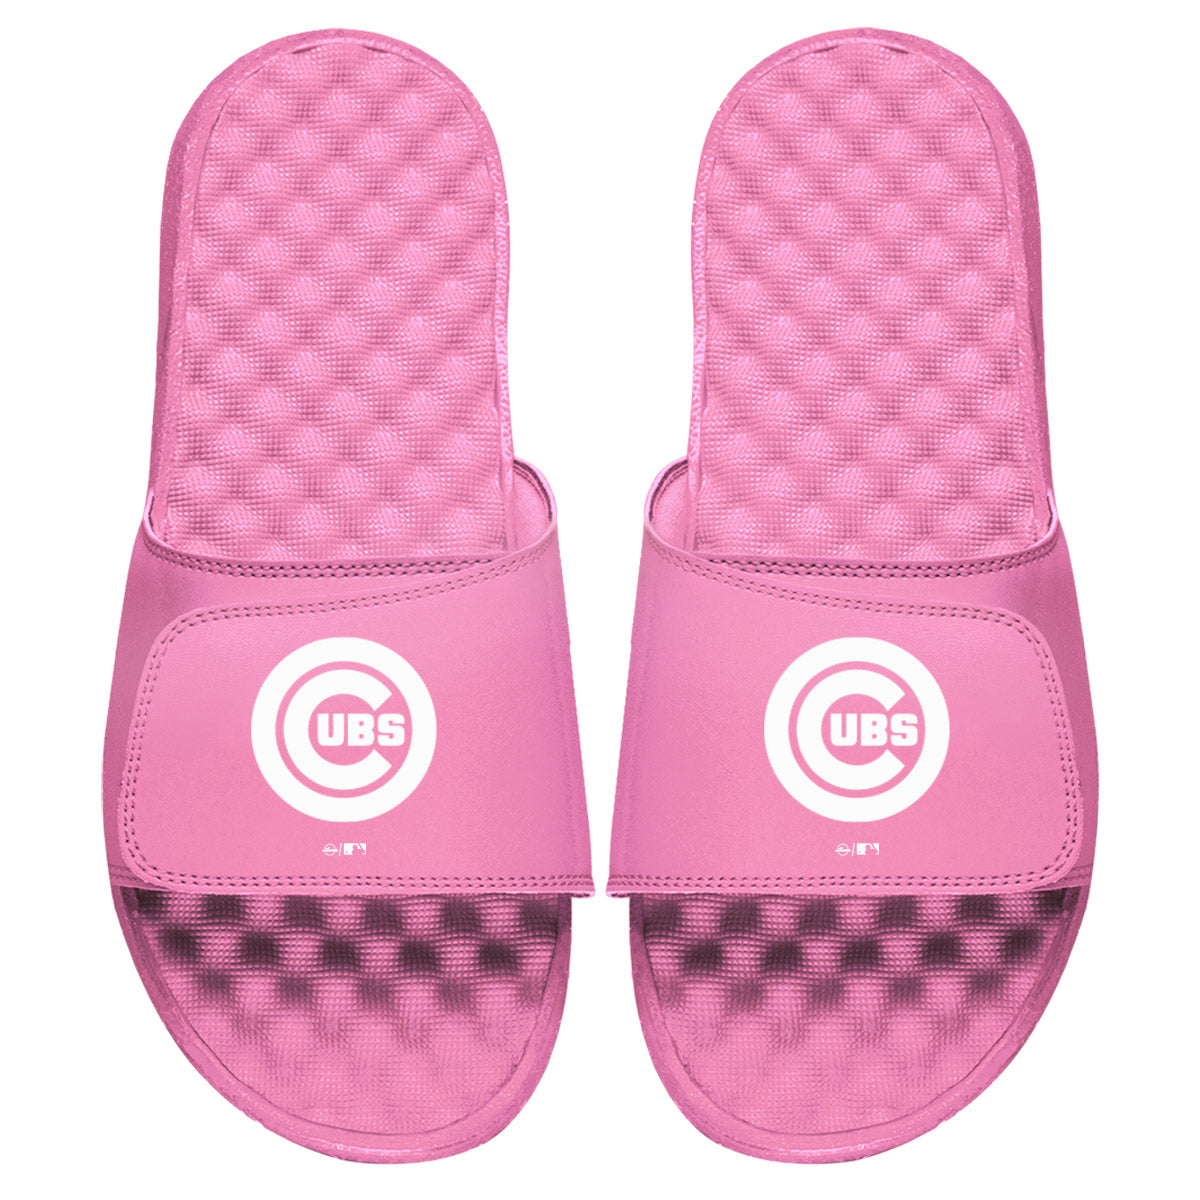 Chicago Cubs Primary Pink Slides